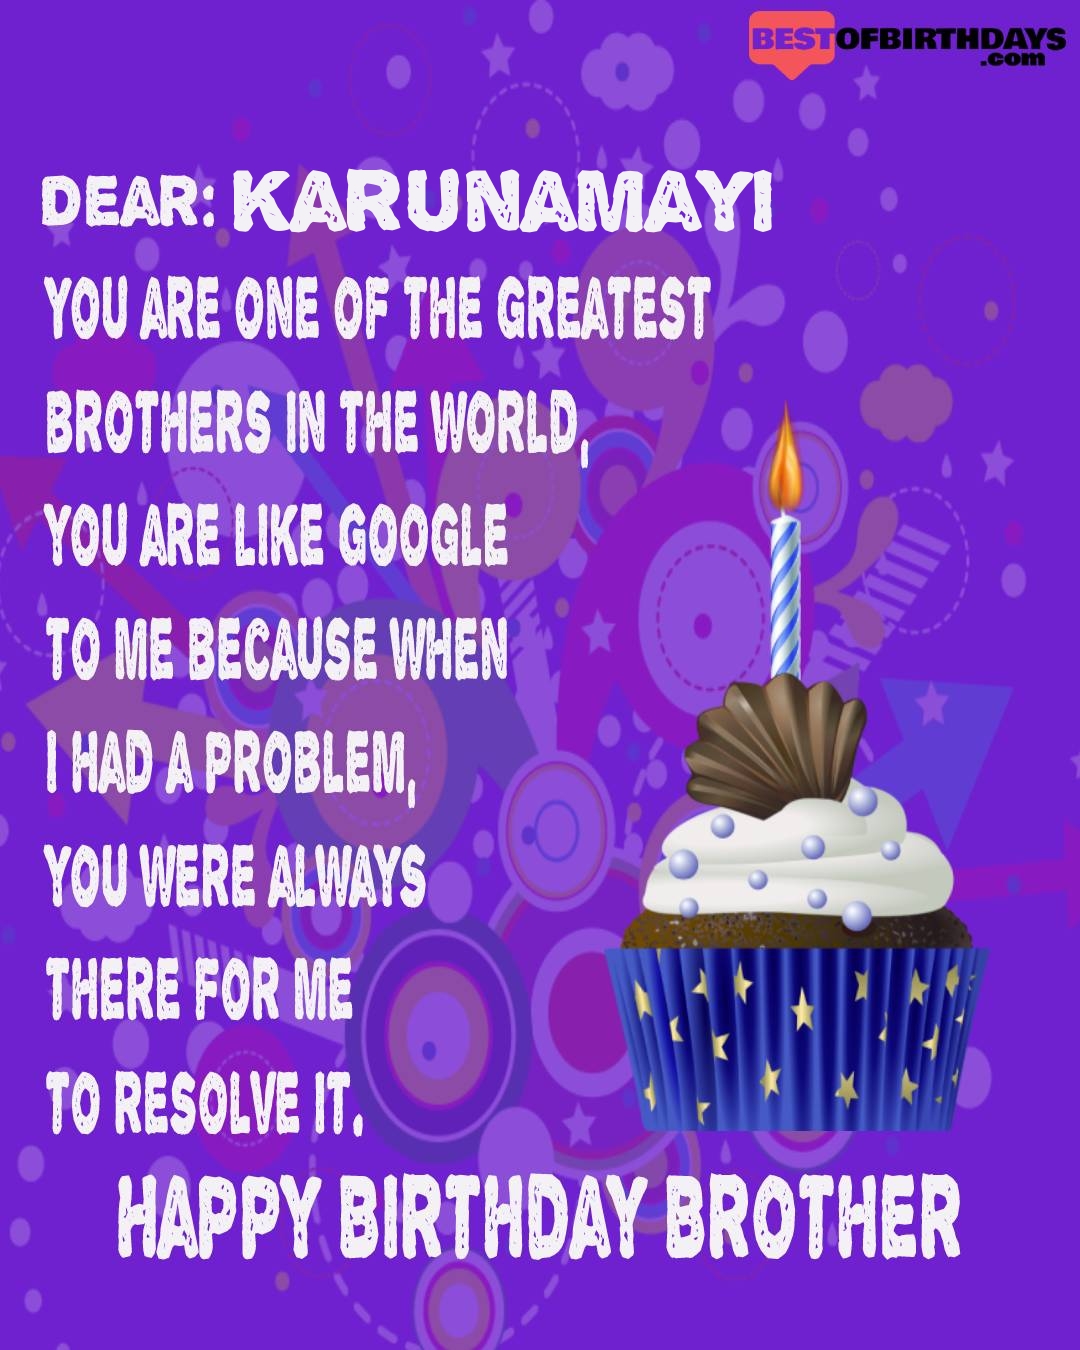 Happy birthday karunamayi bhai brother bro